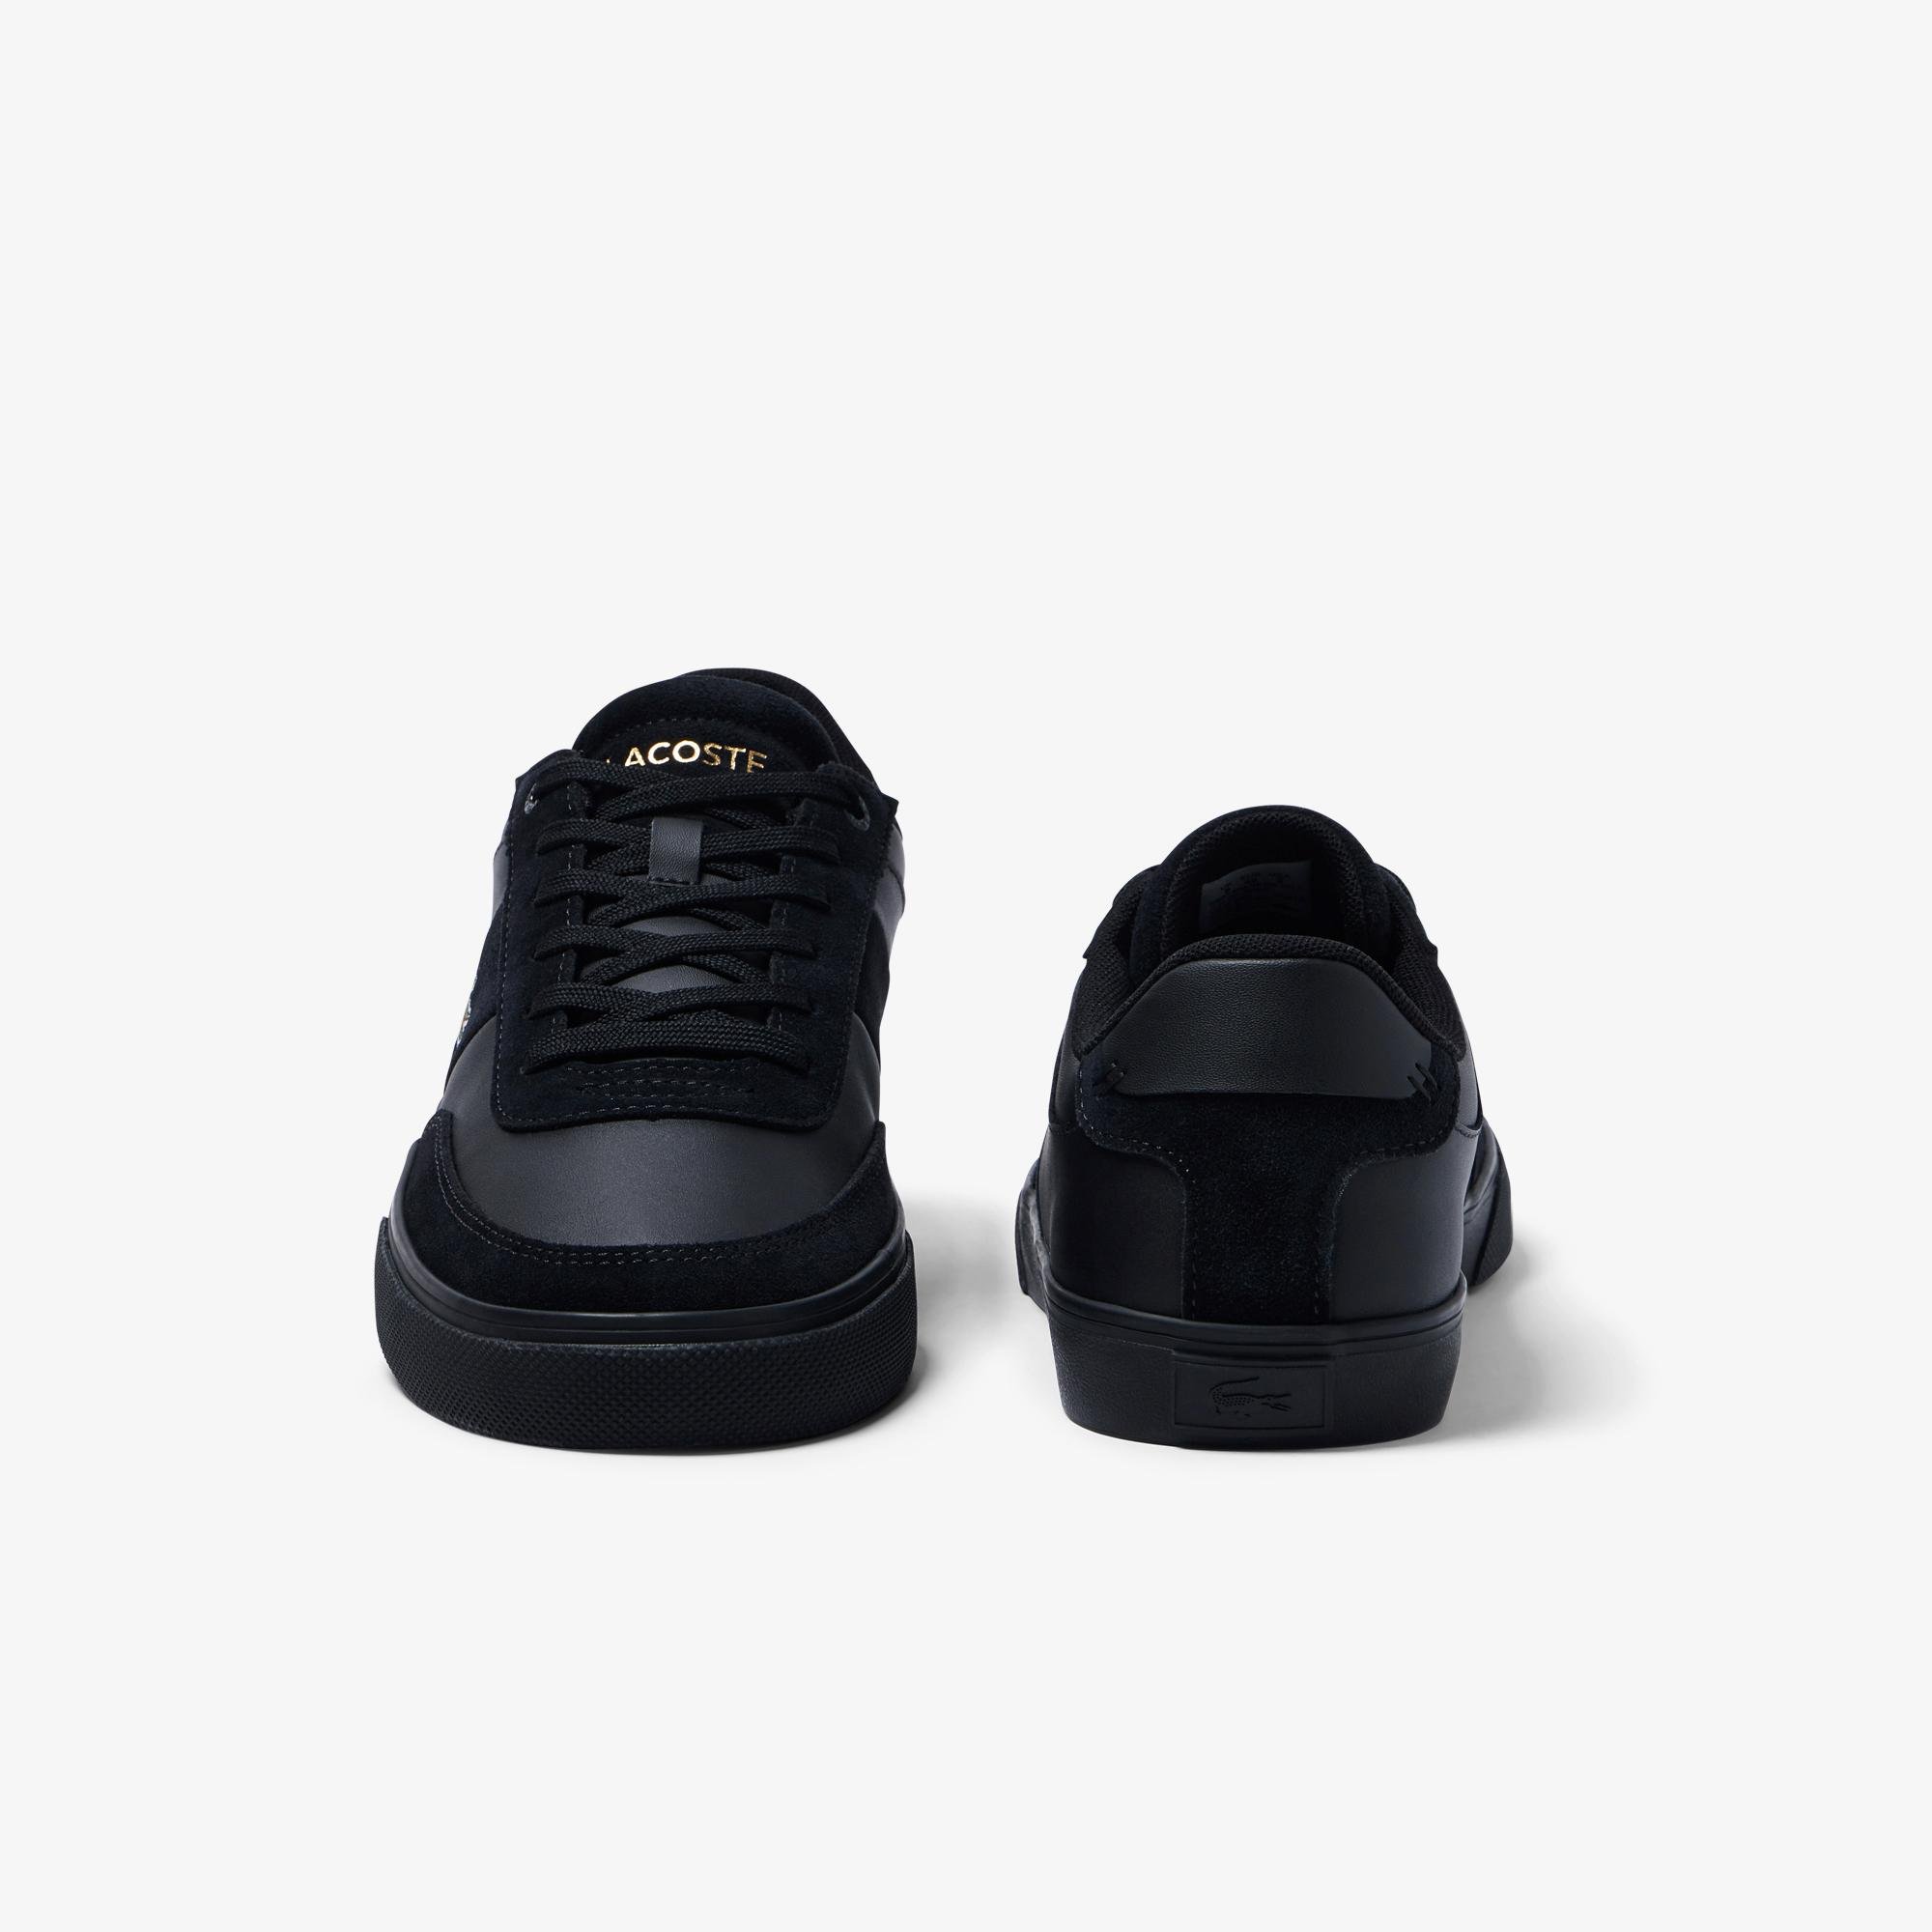 Lacoste SPORT Court-Master Pro men's black sneakers